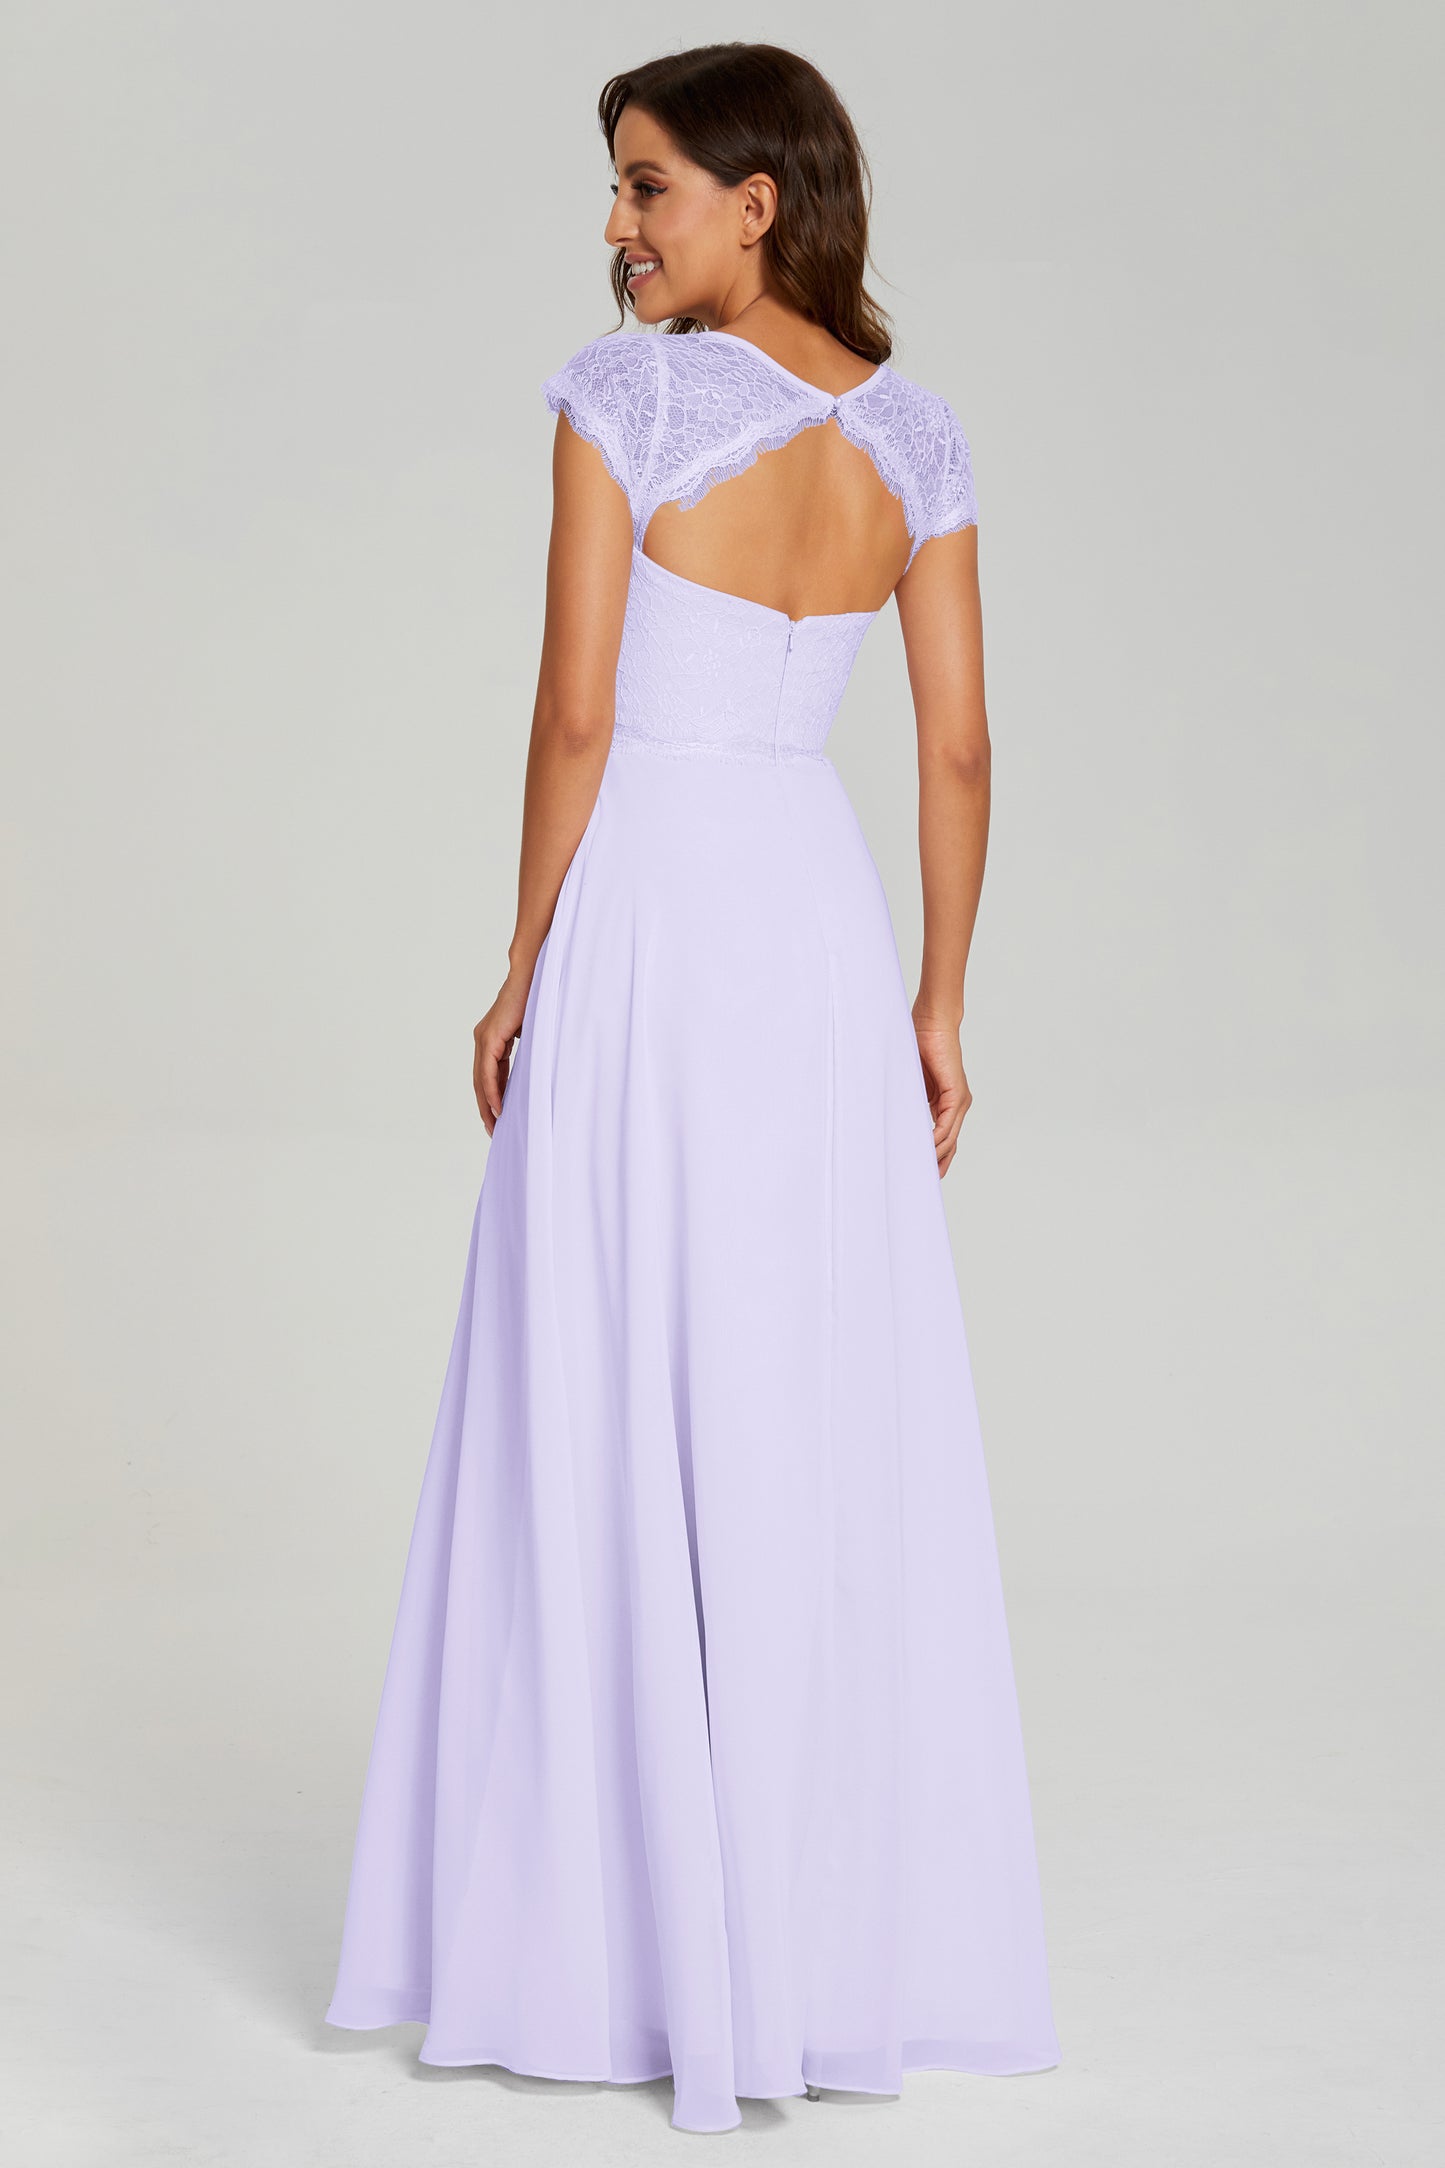 Cap Sleeve Illusion Chiffon Prom Dresses